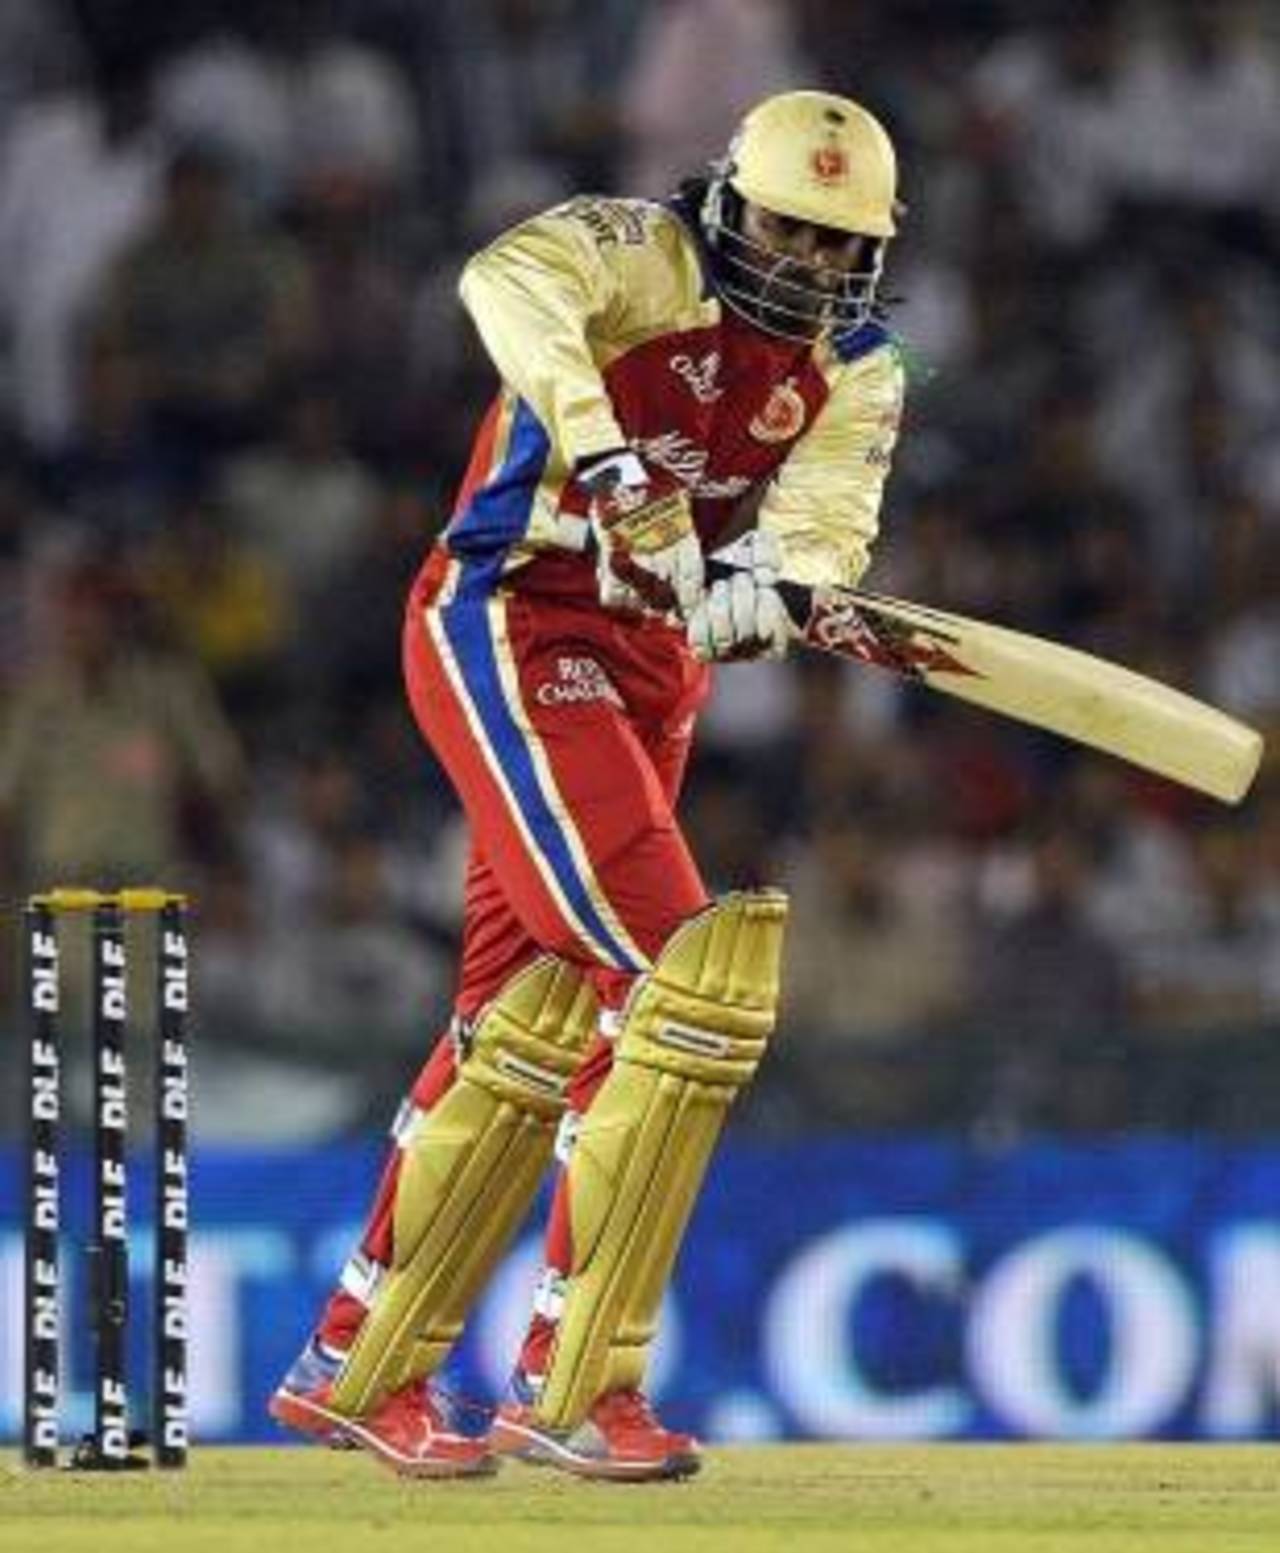 Chris Gayle led Royal Challengers Bangalore's chase, Kings XI Punjab v Royal Challengers Bangalore, IPL 2012, Mohali, April 20, 2012